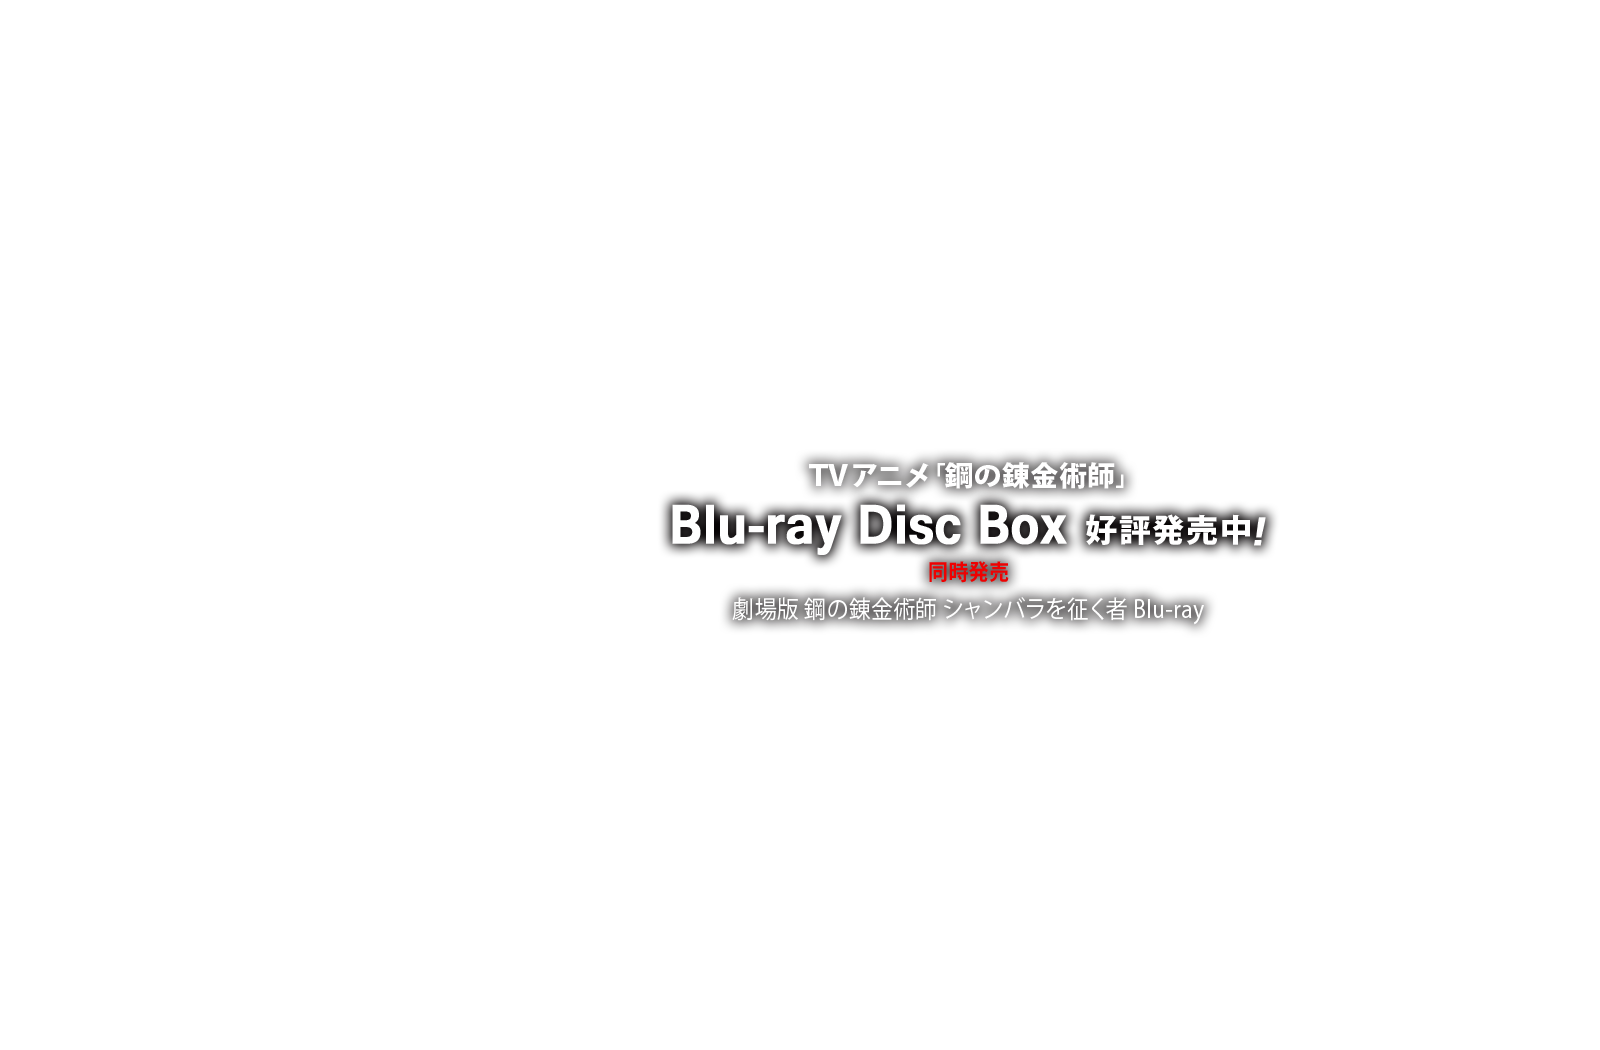 Blu-ray Dosc Box 10月29日発売！